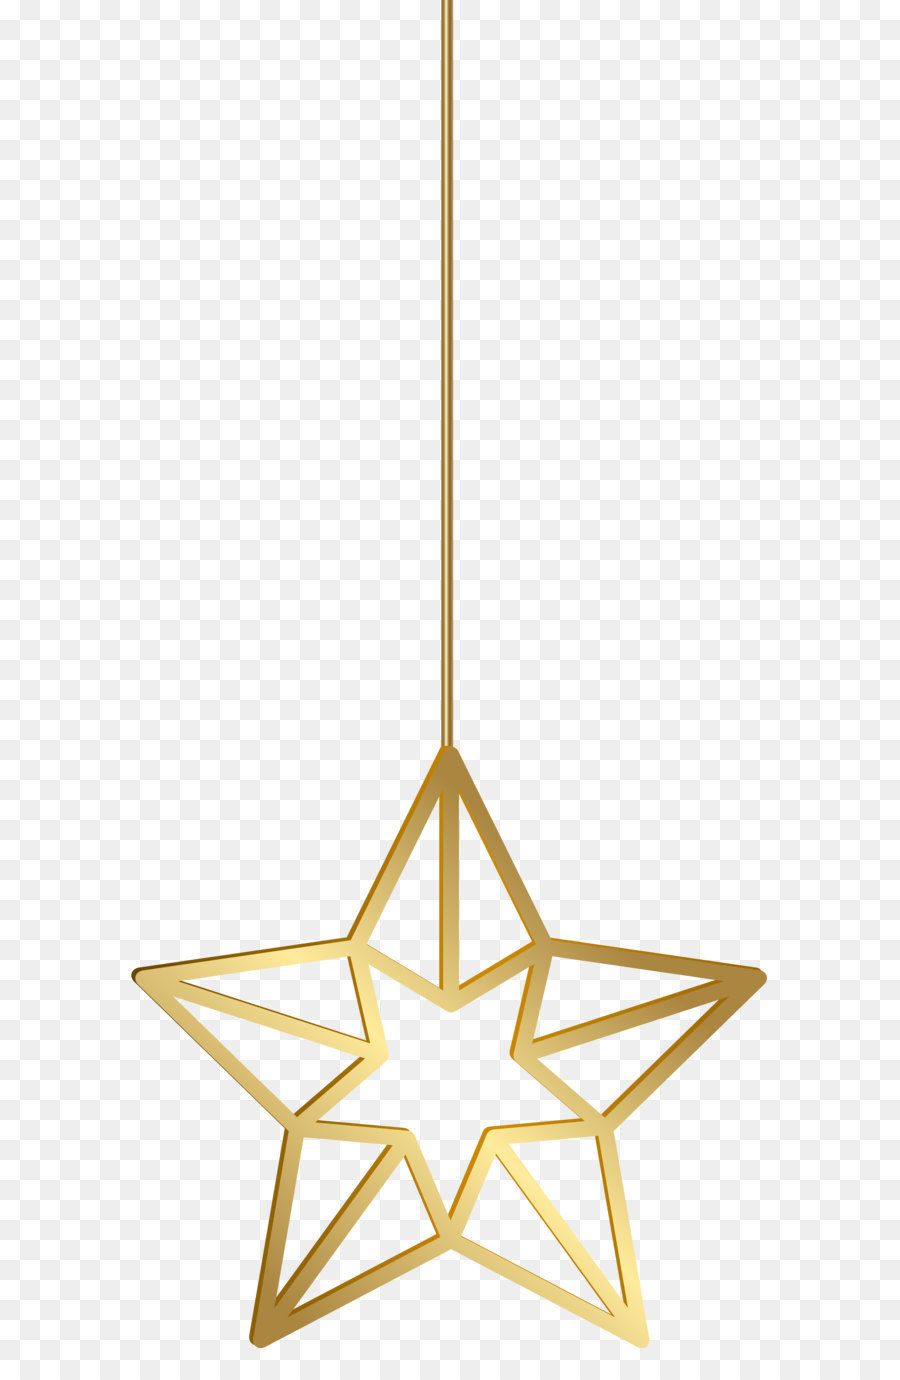 Star Gold Clip art - Hanging Star Gold Transparent PNG Clip Art png download - 3820*8000 - Free Transparent Star png Download.